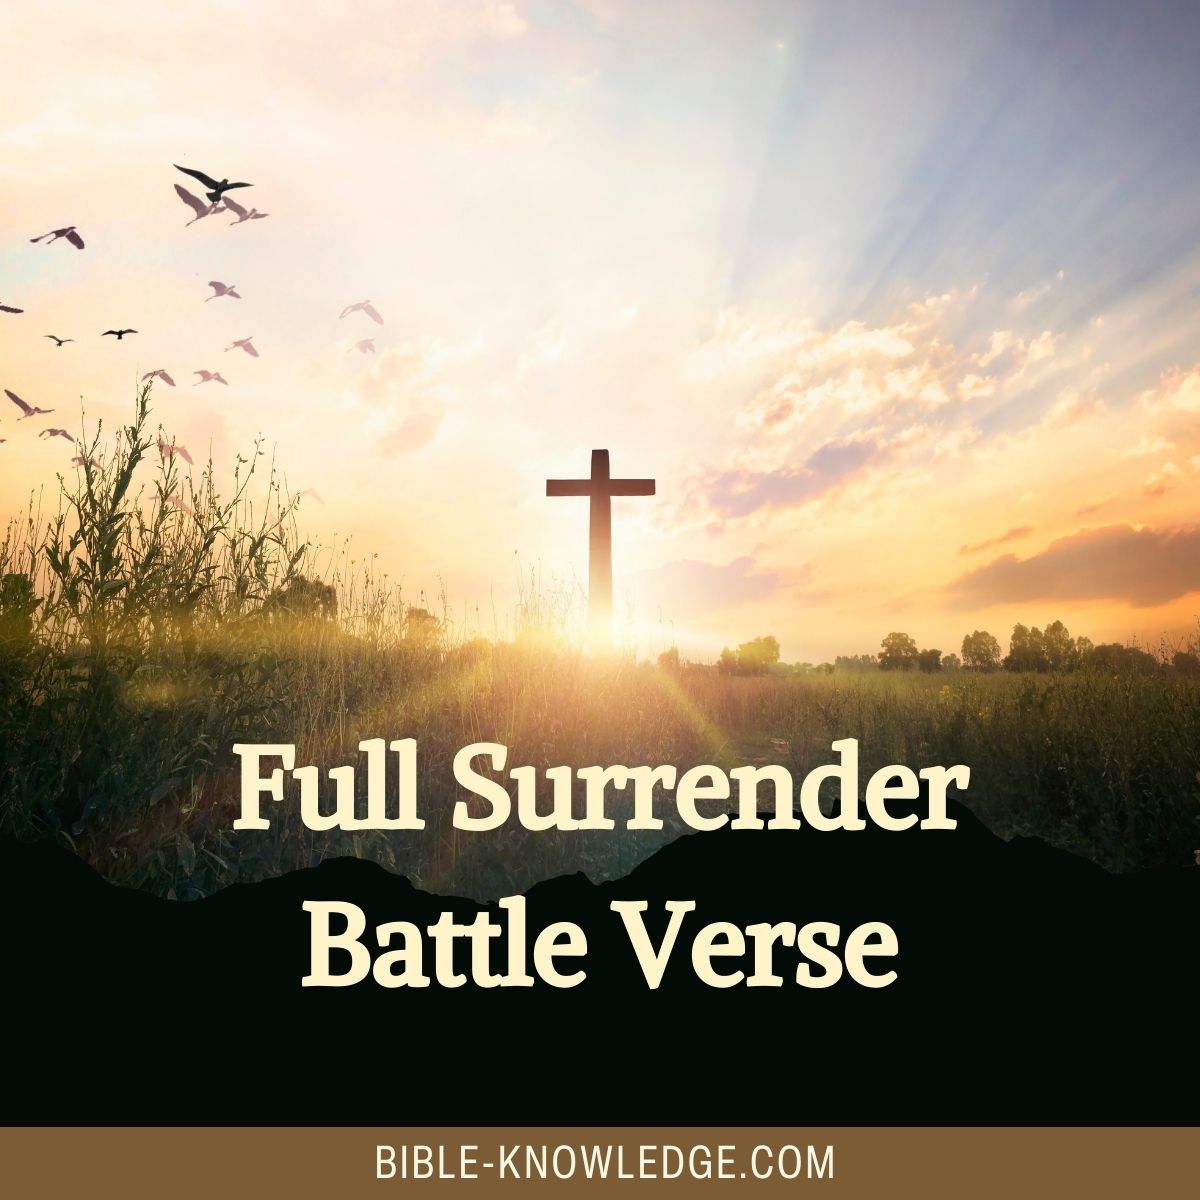 Full Surrender Battle Verse